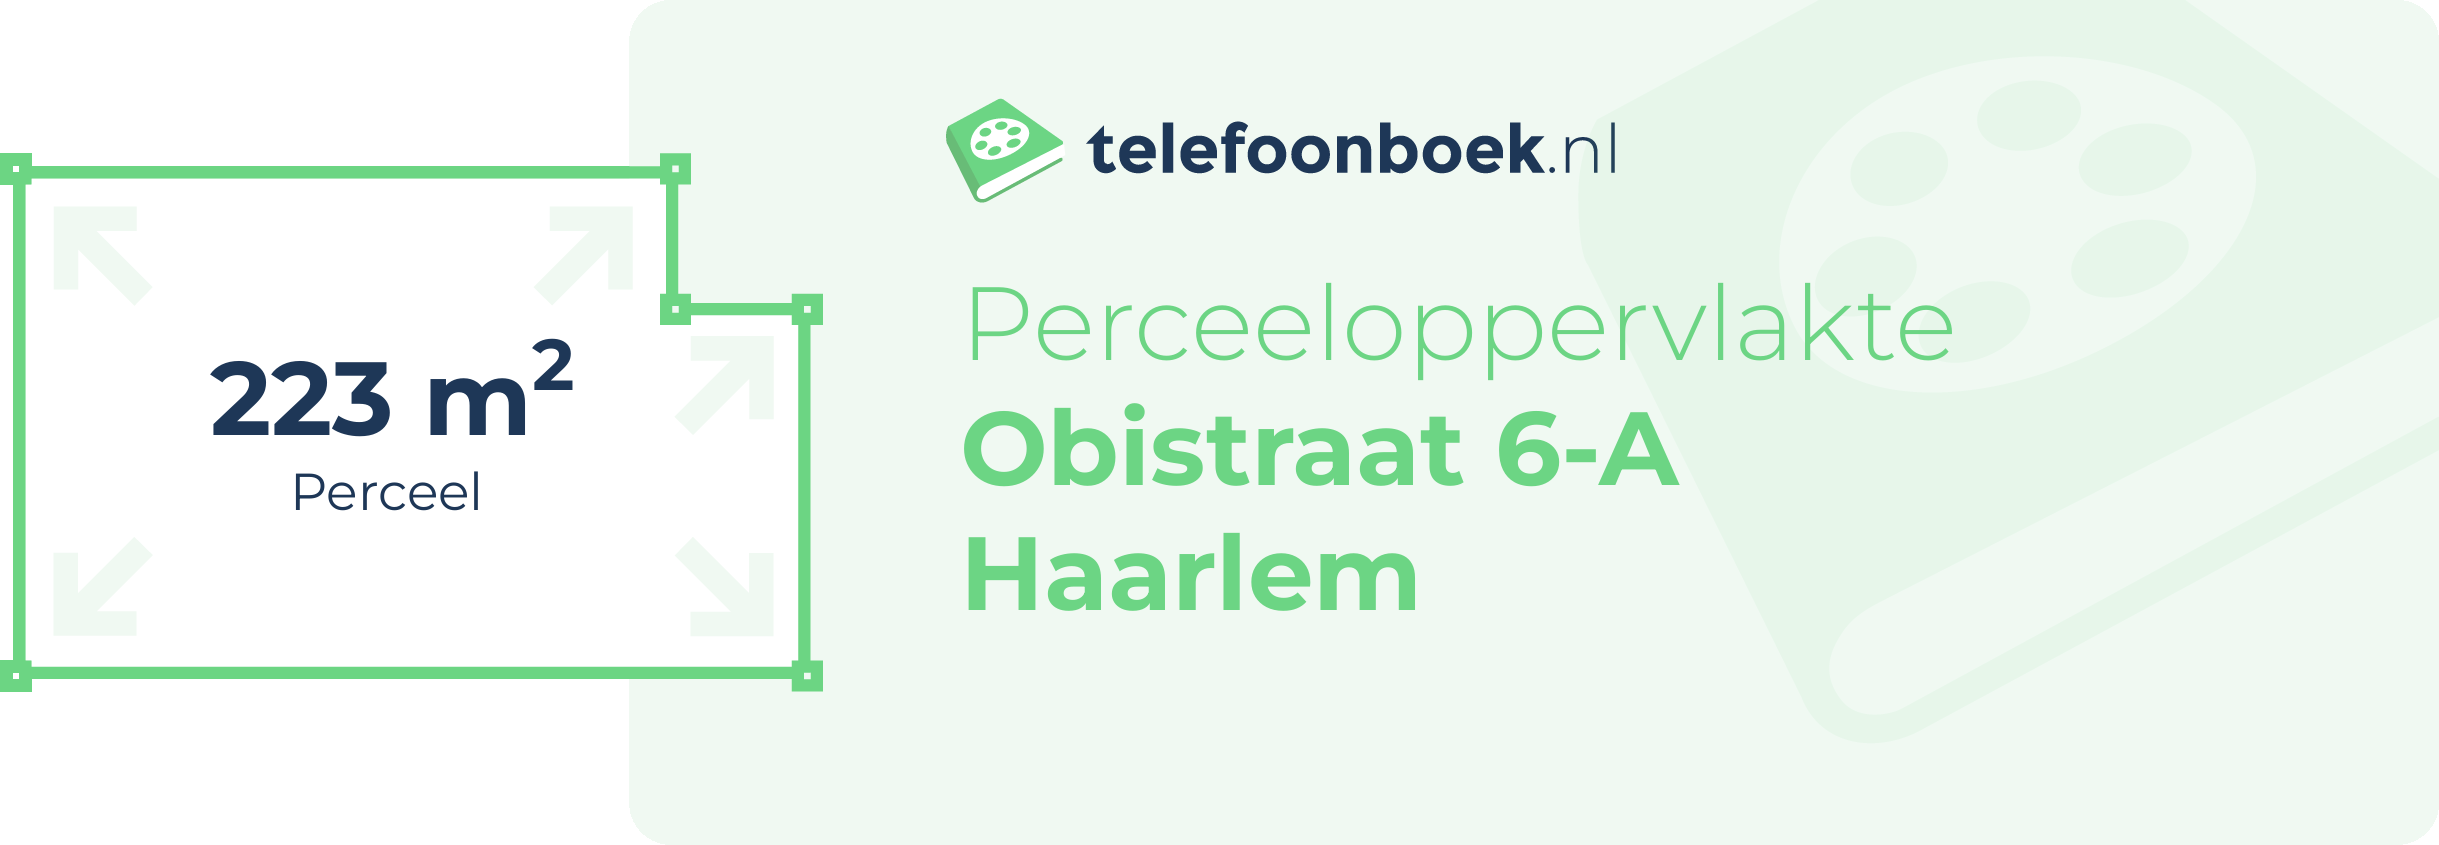 Perceeloppervlakte Obistraat 6-A Haarlem